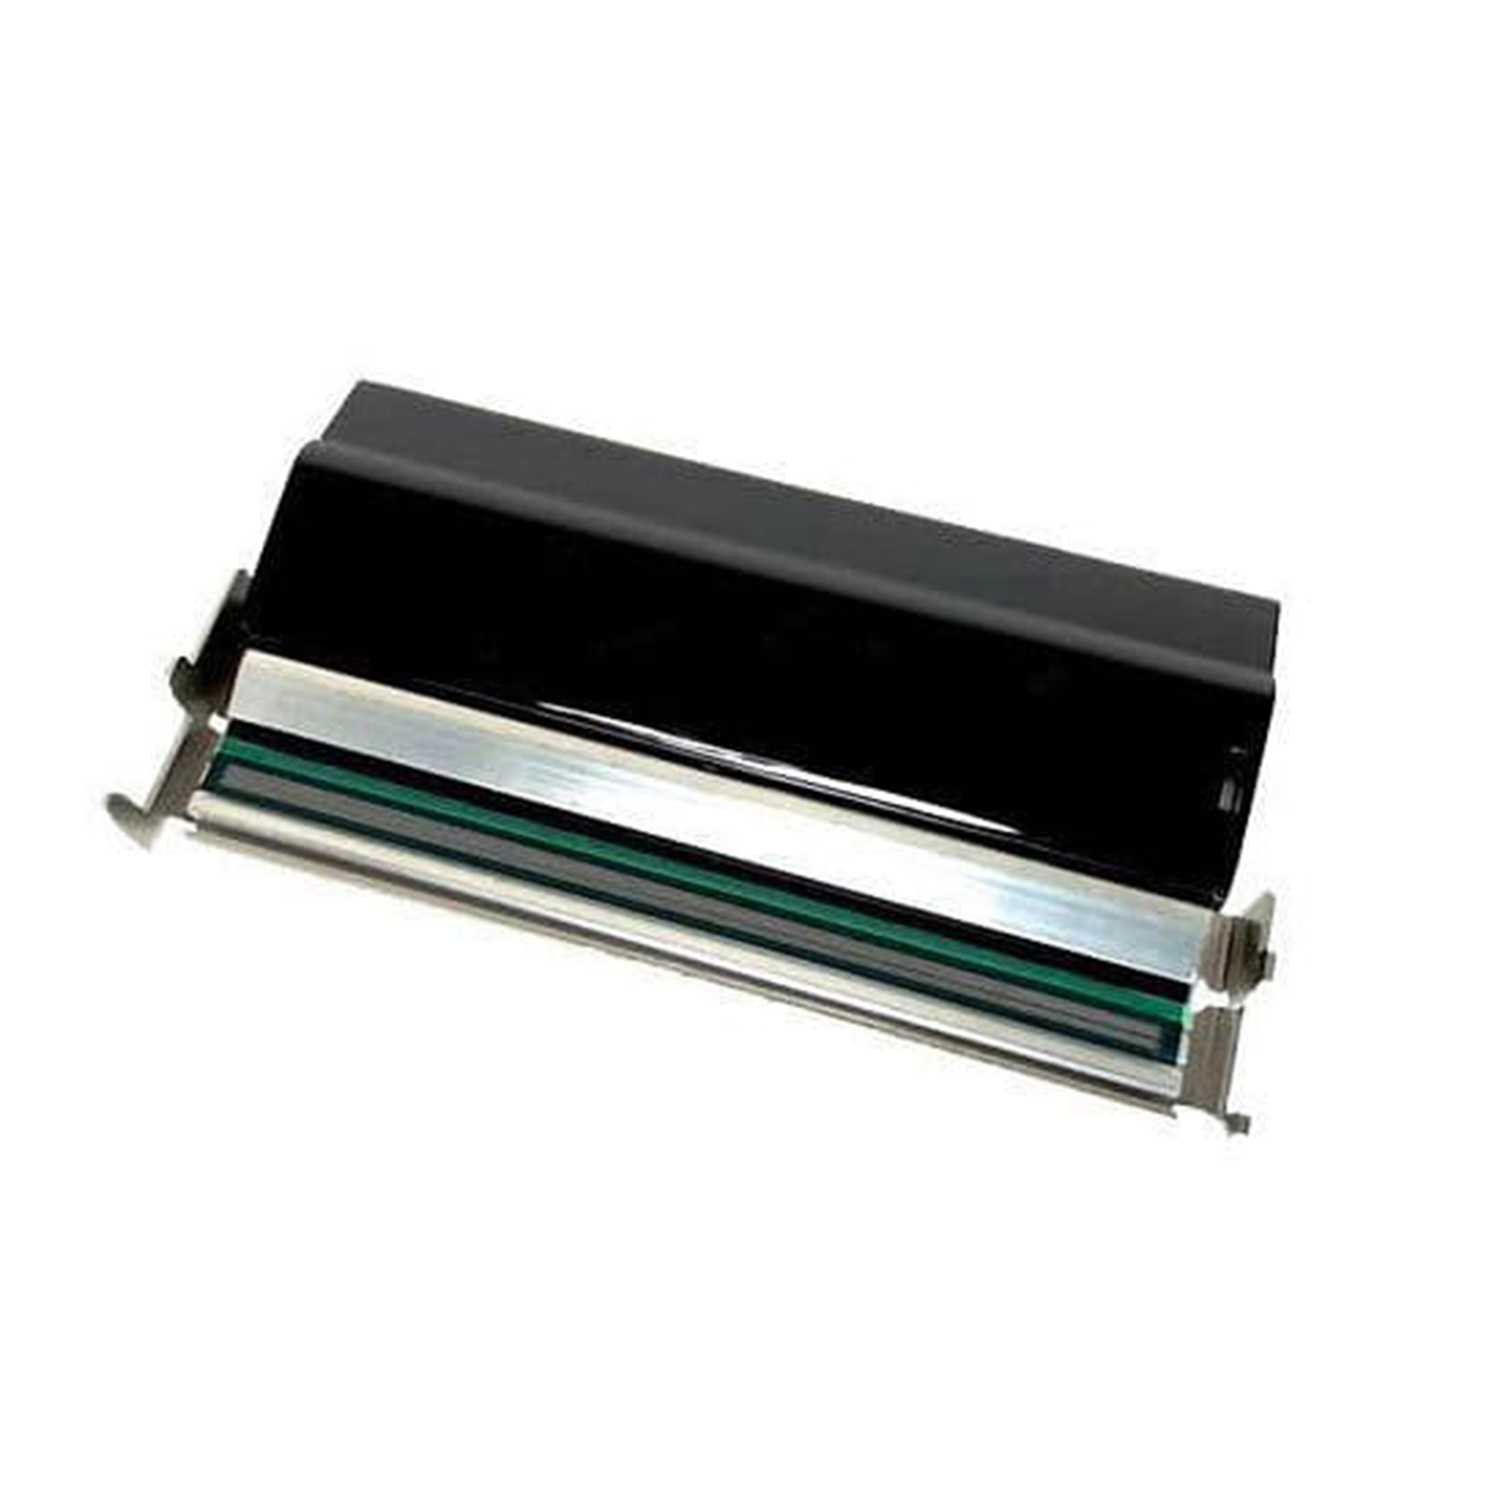 Thermal Printheads for Zebra Thermal Printers